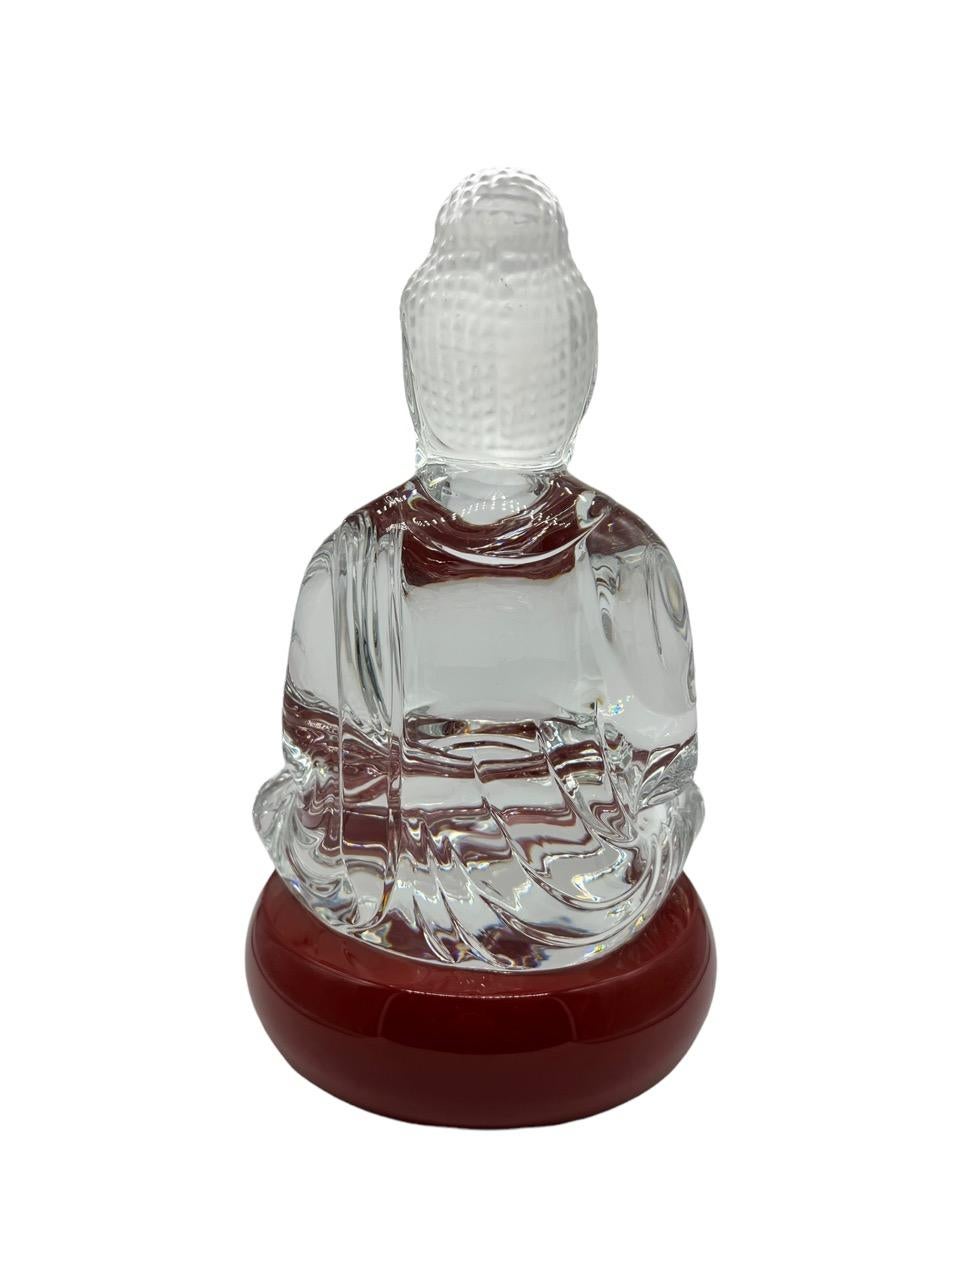 20th Century Baccarat Clear Crystal Buddah Figurine Designed by Kenzo Takada For Sale